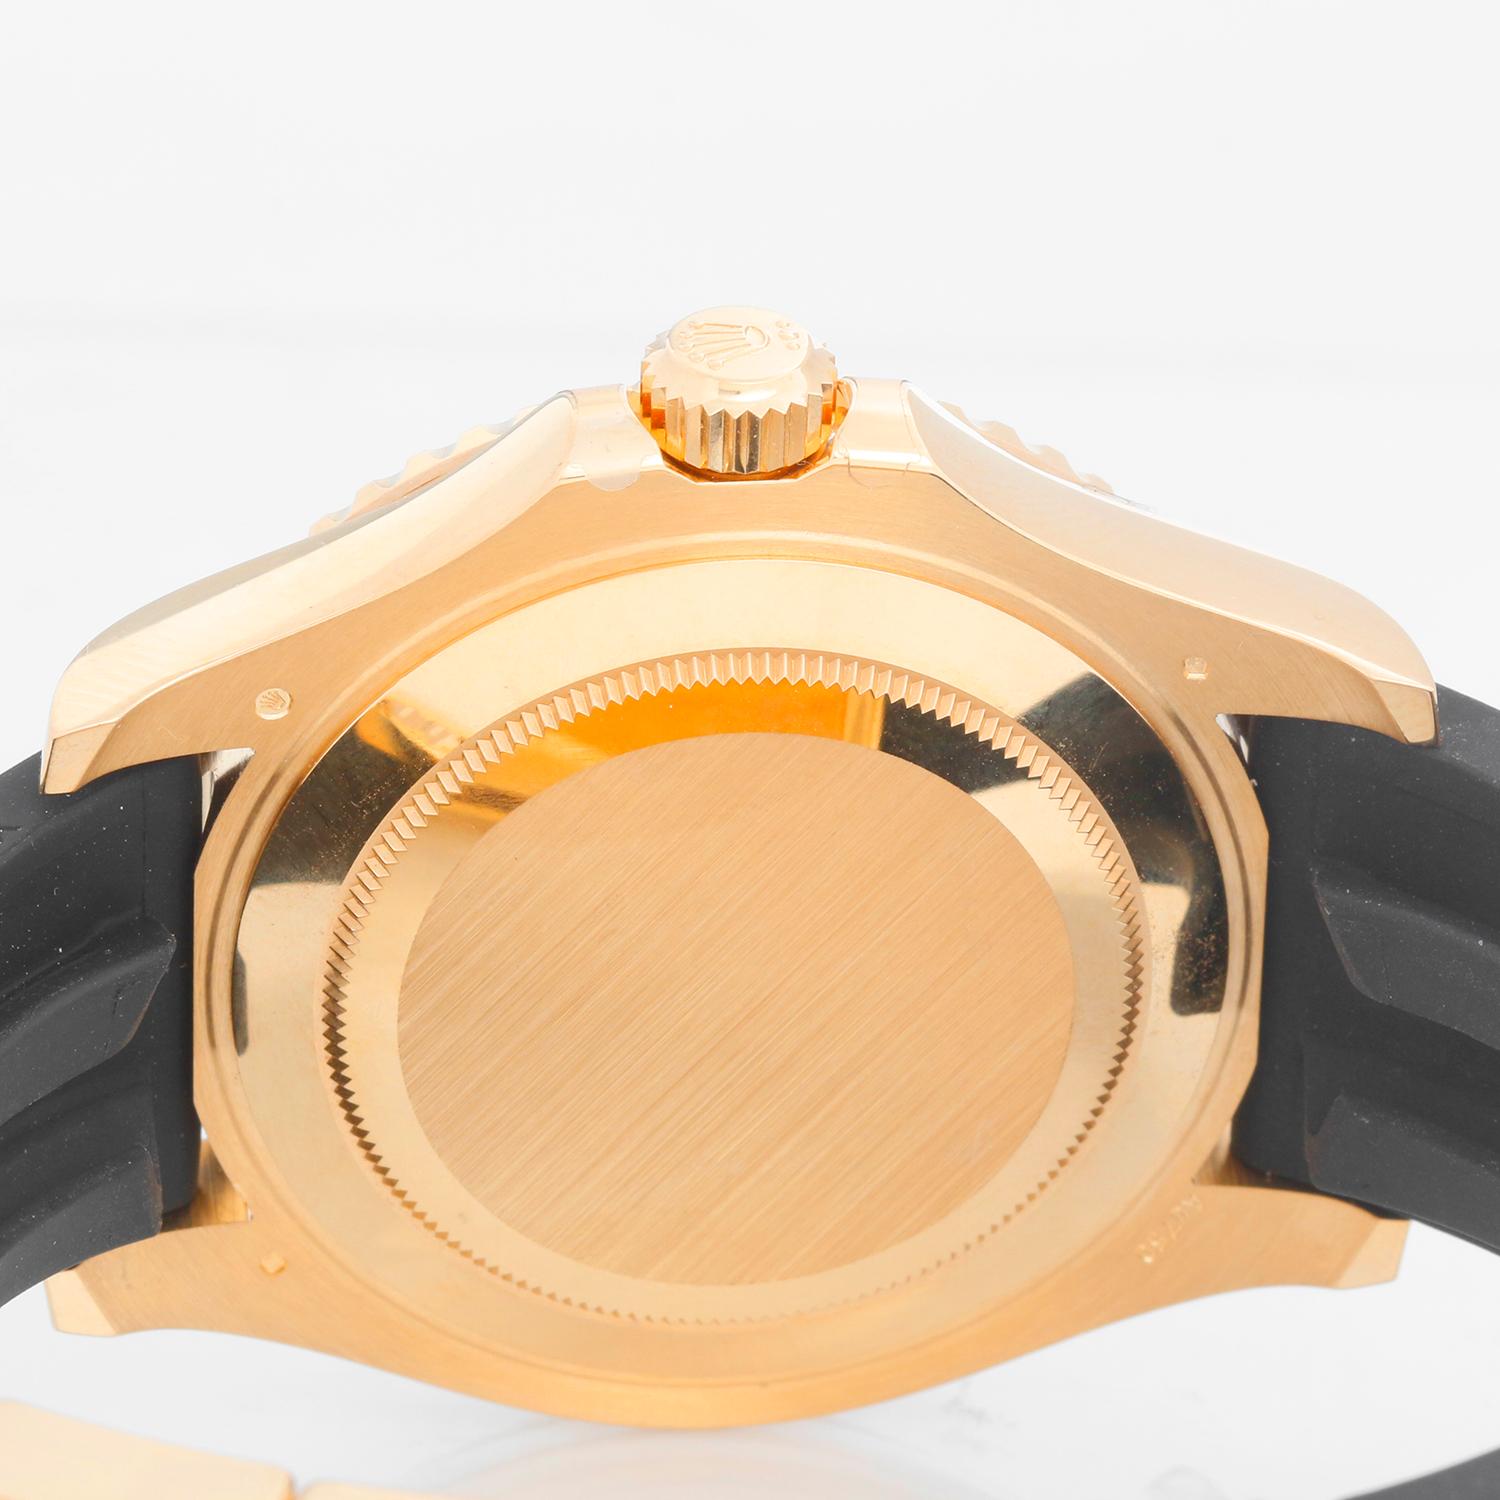 Rolex Yacht-Master Oysterflex 18k Yellow Gold Men's Watch 226658 1